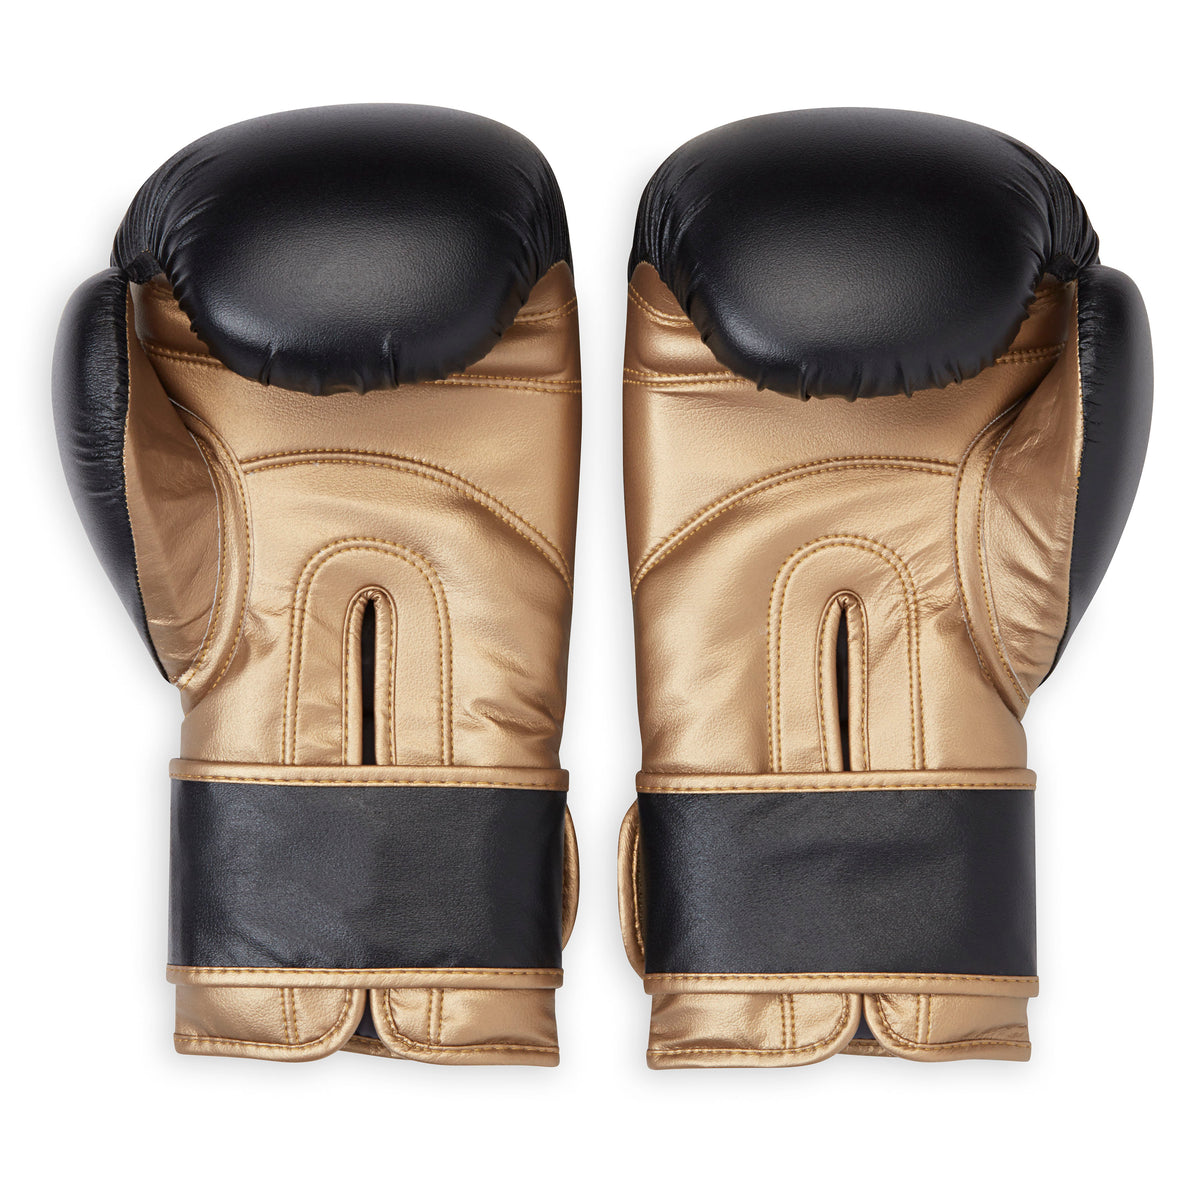 FILA Boxing Gloves (14oz) Black/Gold both gloves interior